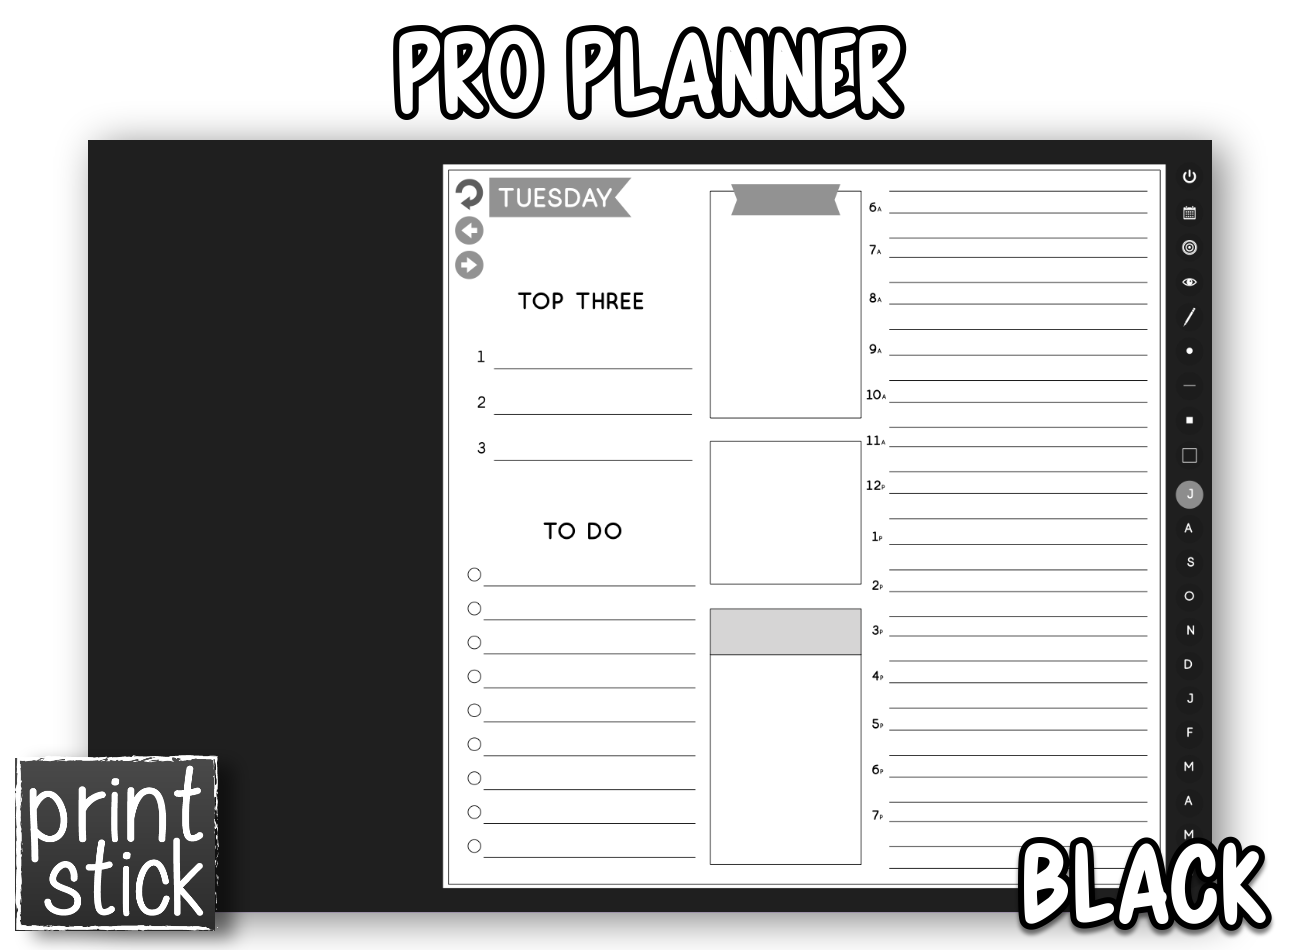 digital-planner-pro-planner-printstick